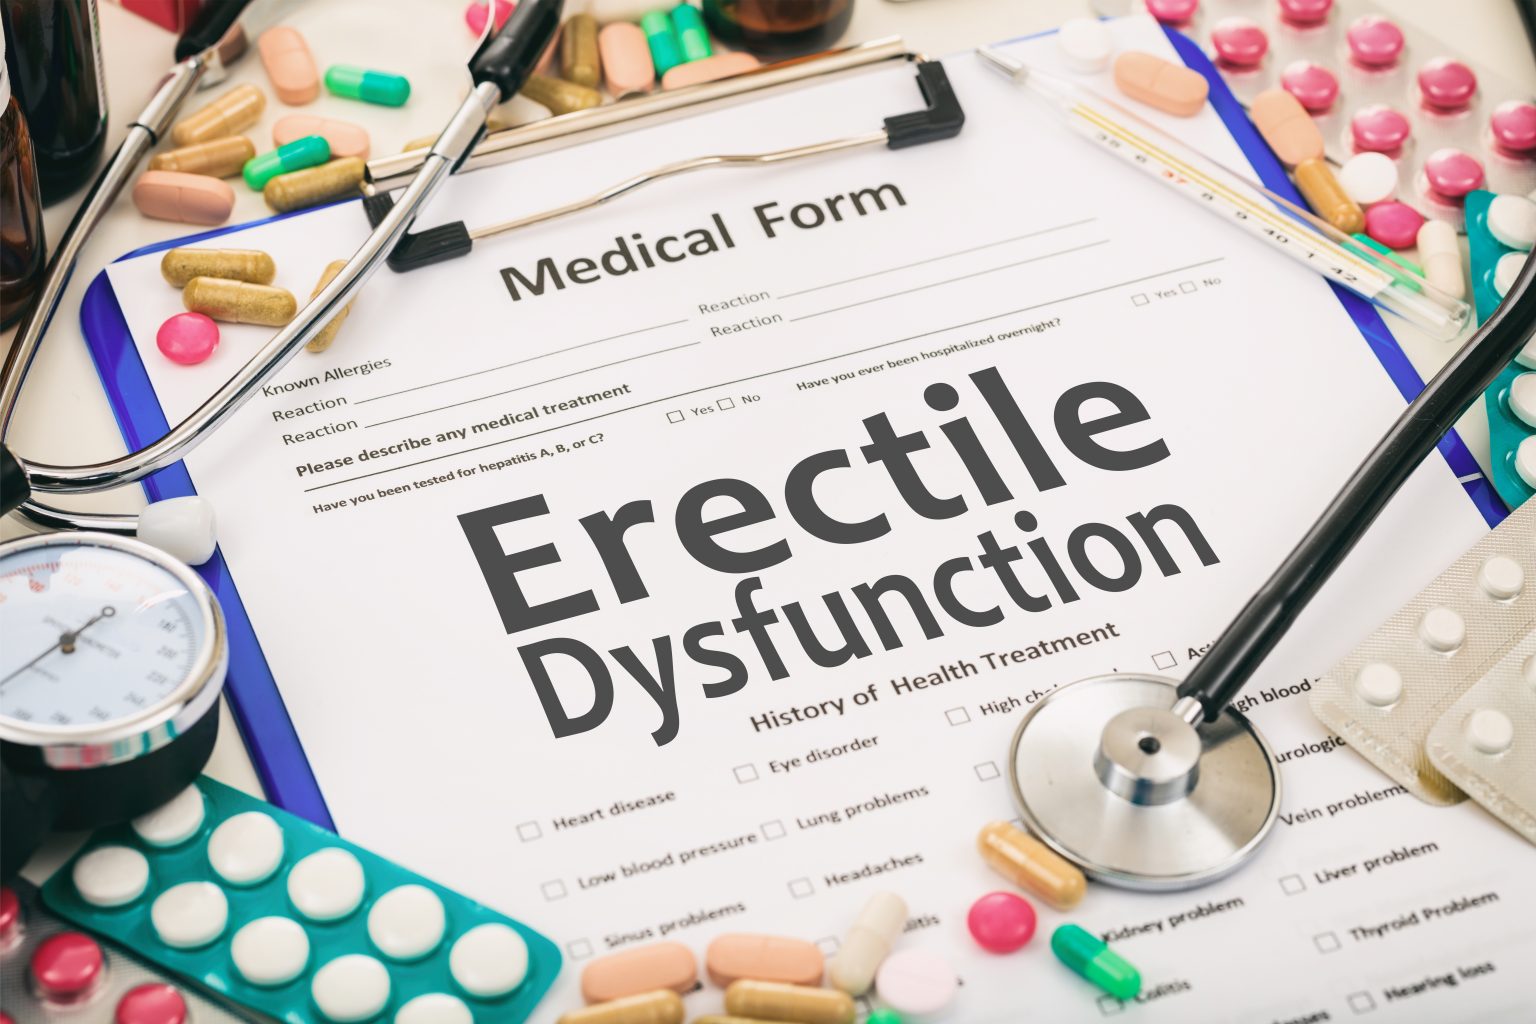 Medical Form Diagnosis Erectile Dysfunction Z Urology